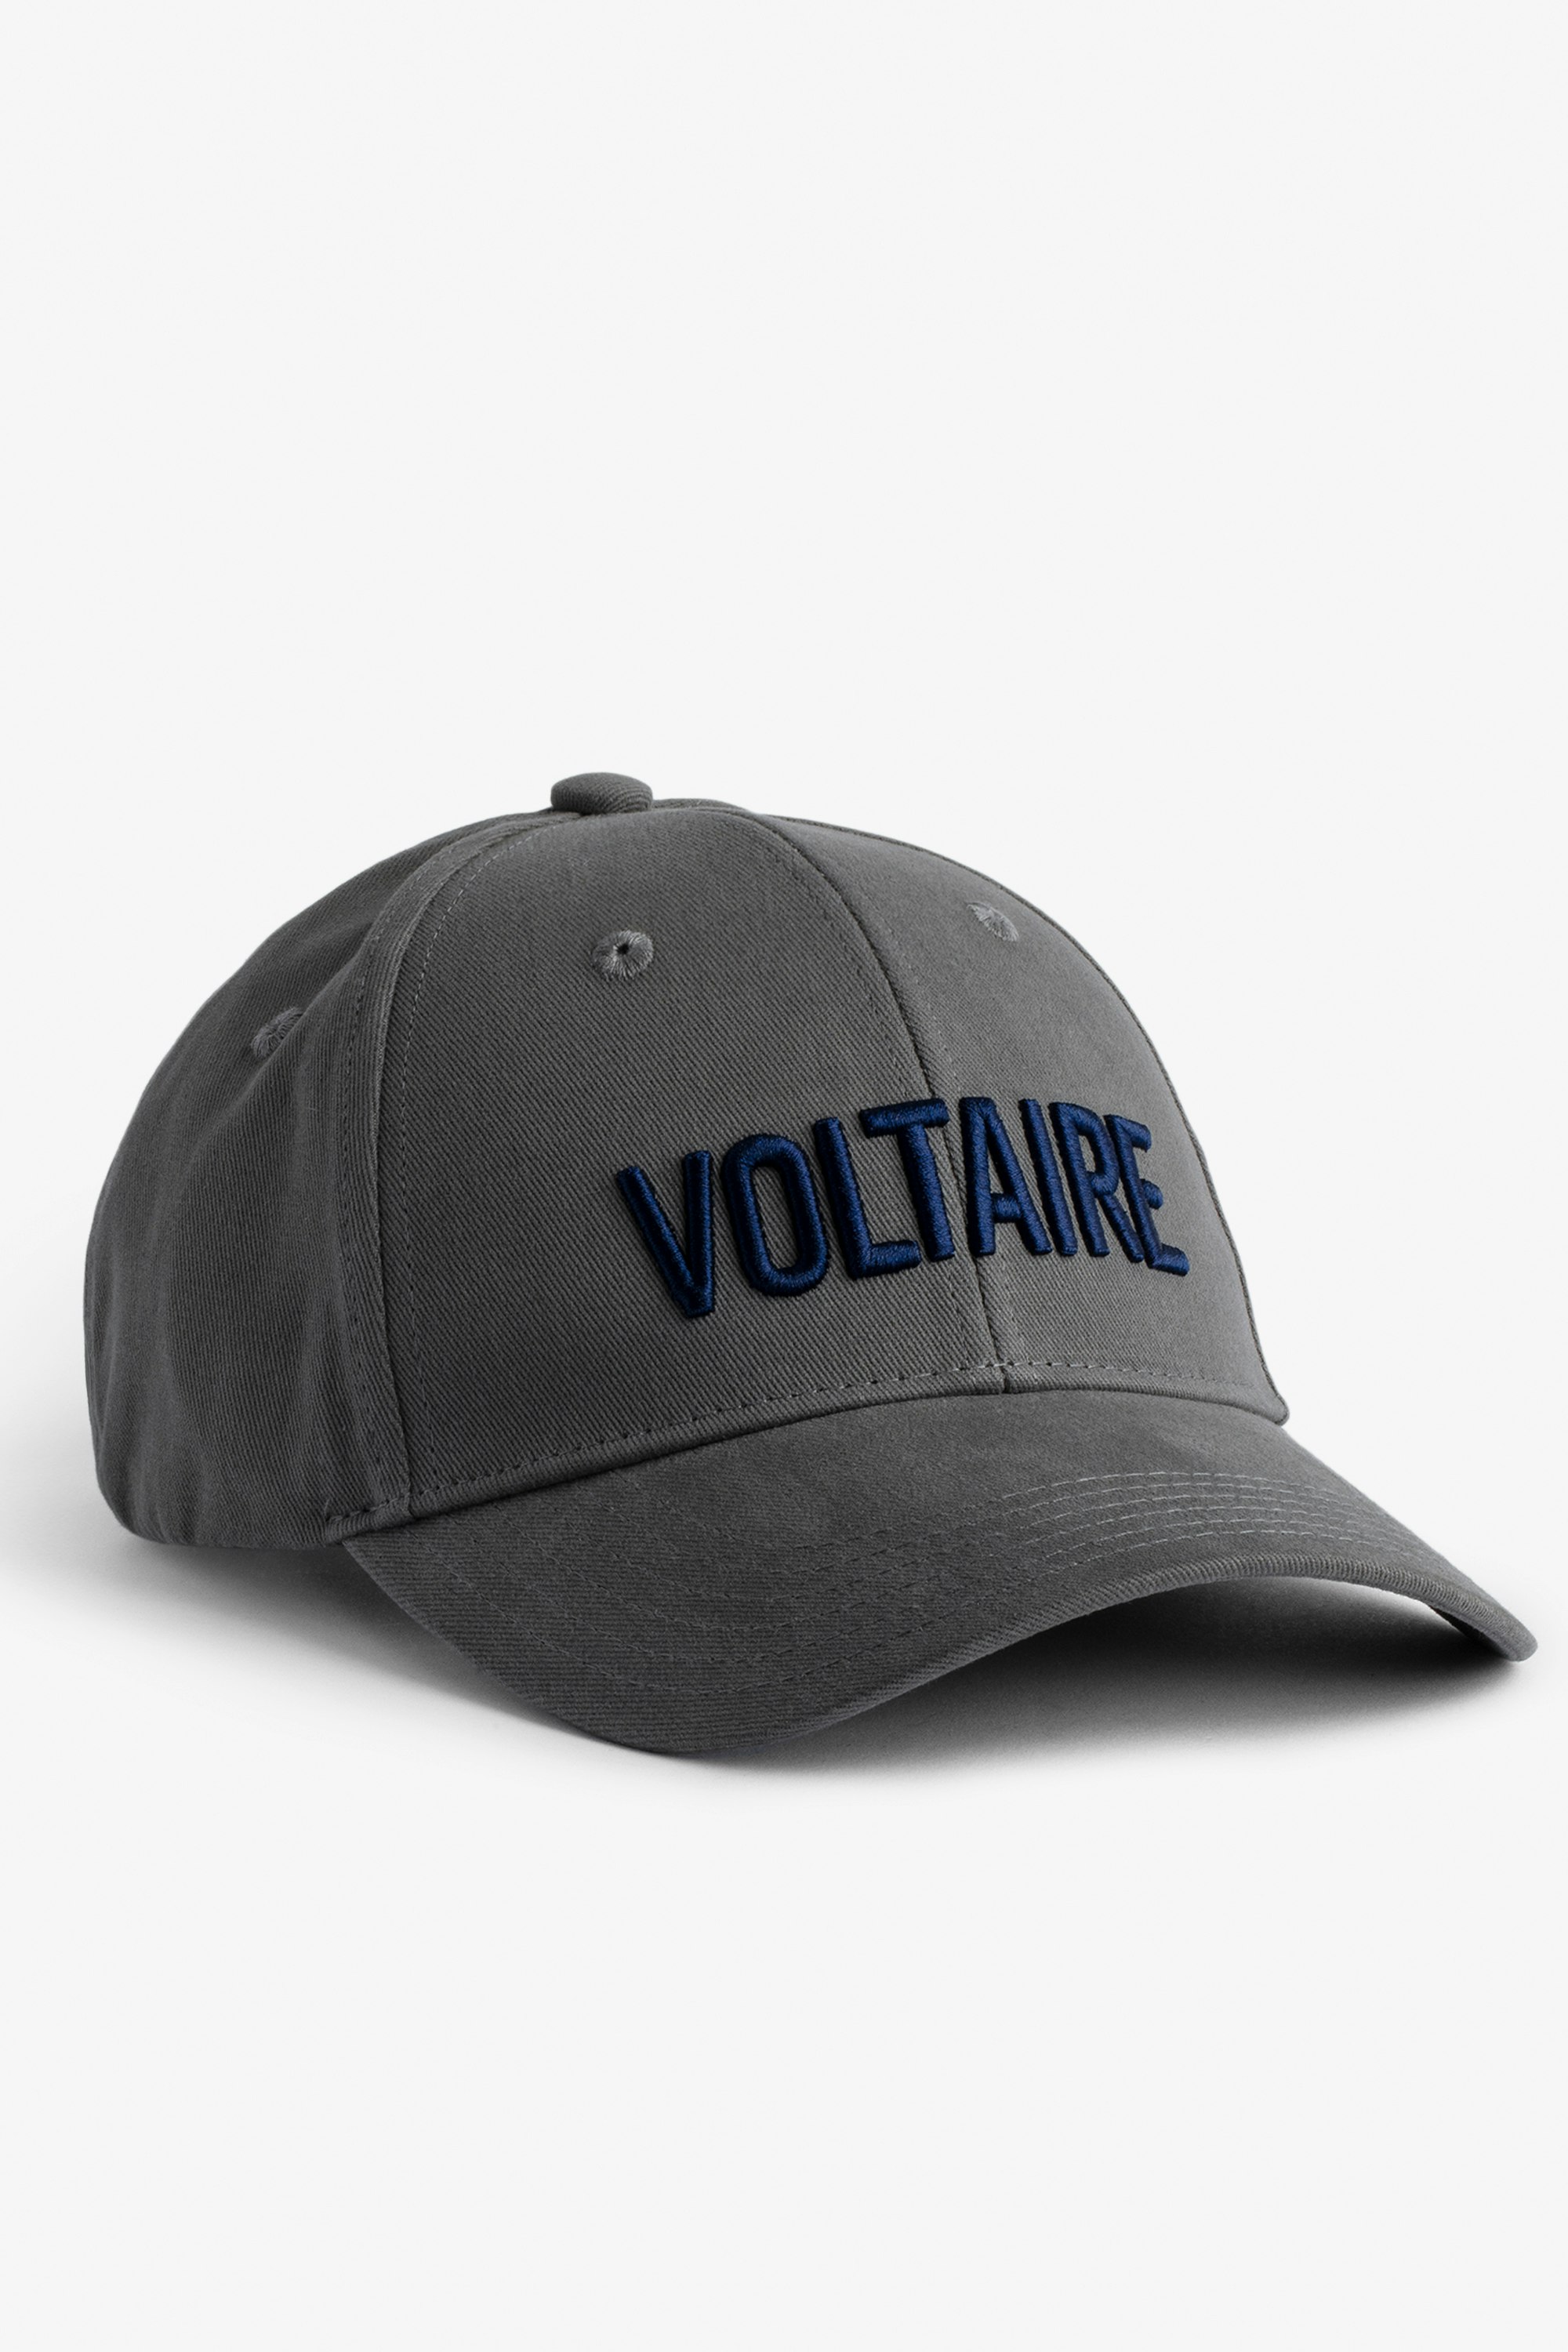 Klelia Voltaire Cap - Men's grey cotton cap embroidered “Voltaire”.